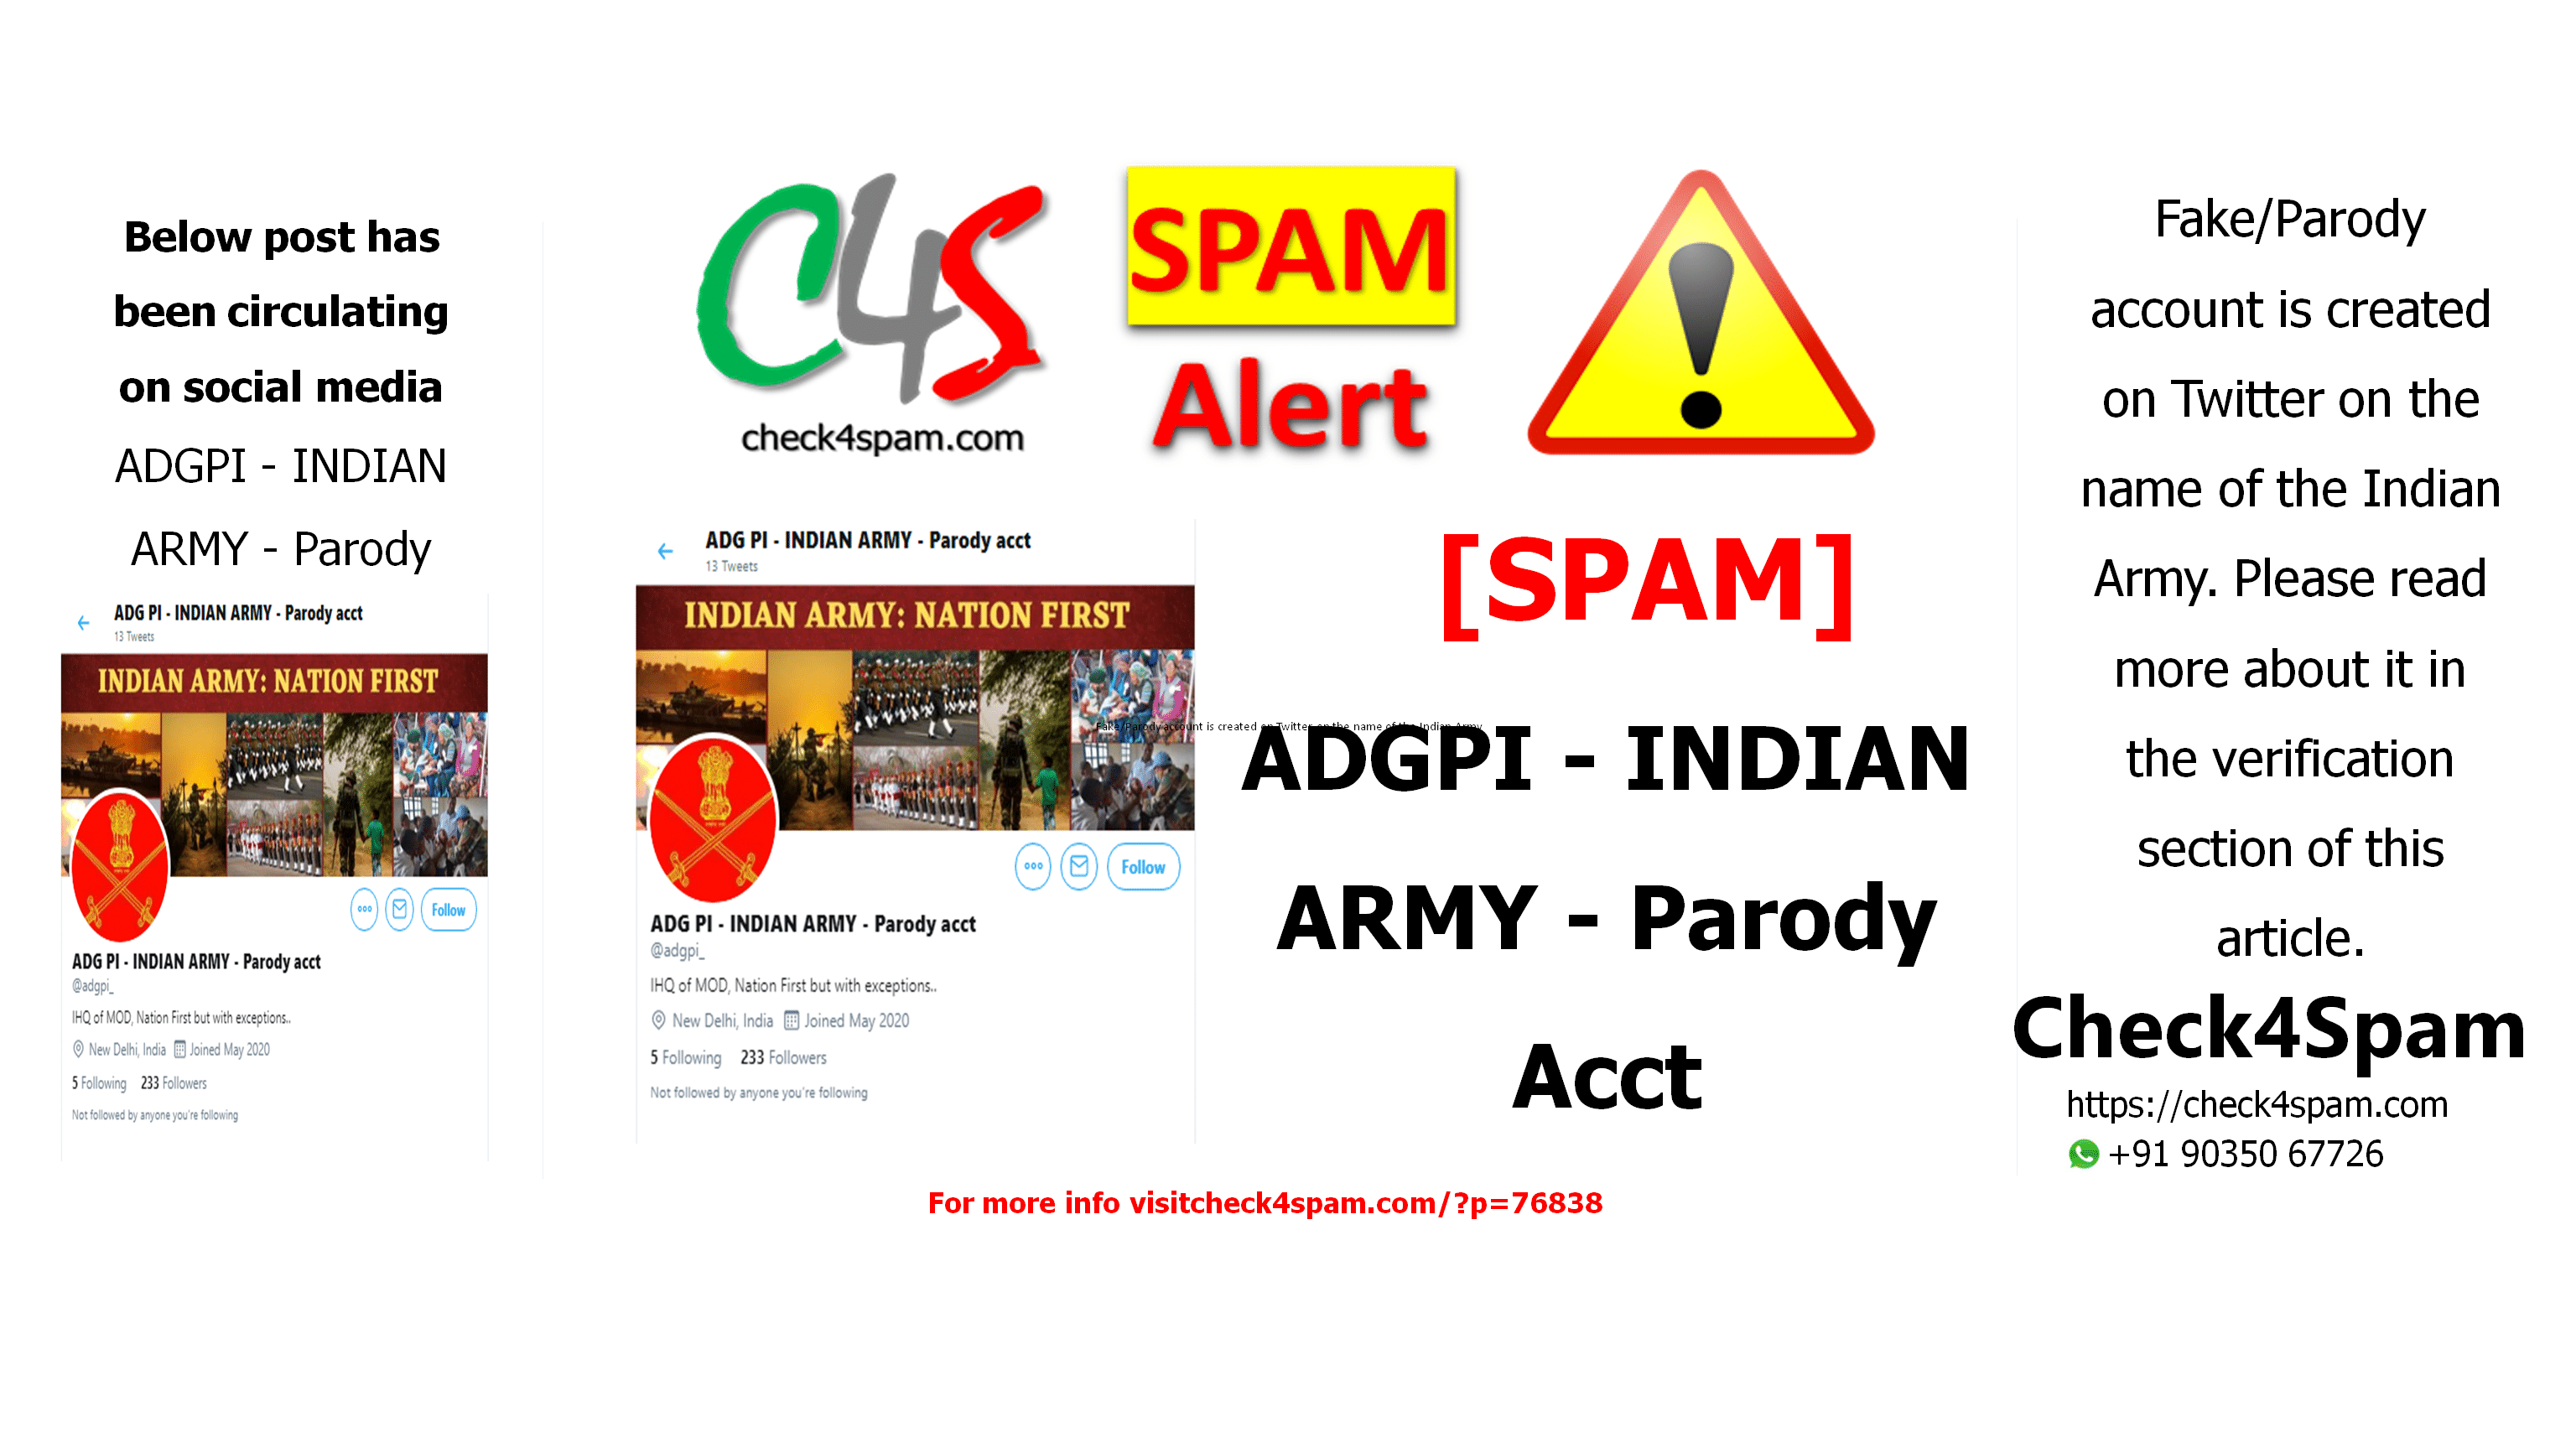 ADGPI - INDIAN ARMY - Parody Acct